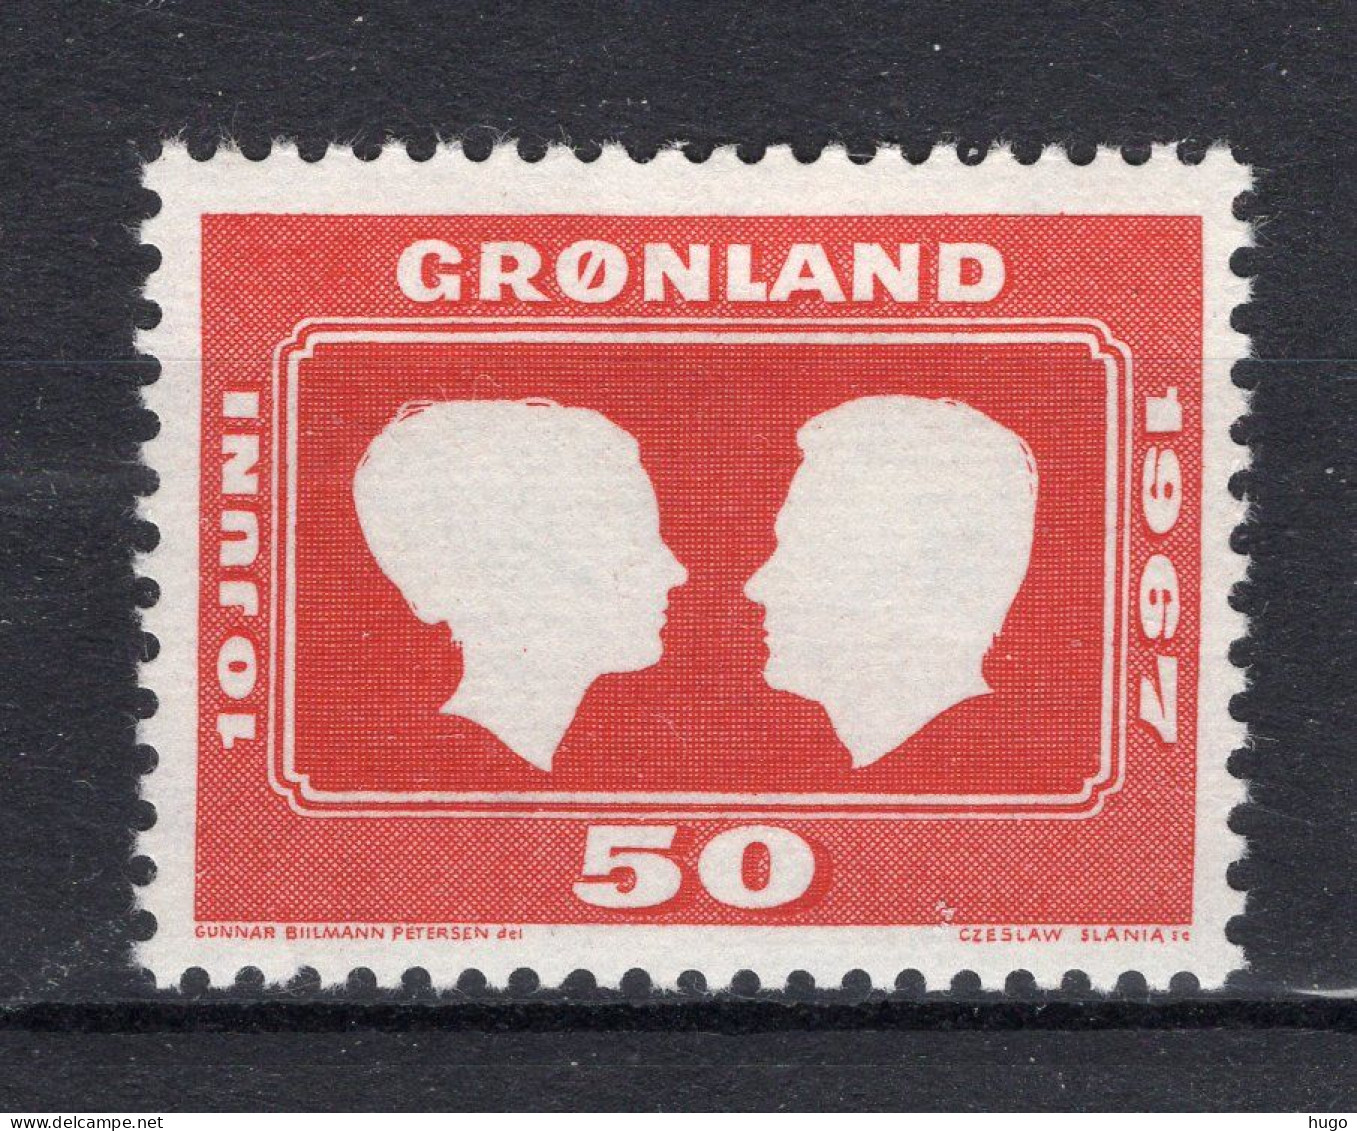 DENEMARKEN-GROENLAND 59 MNH 1967 -1 - Neufs